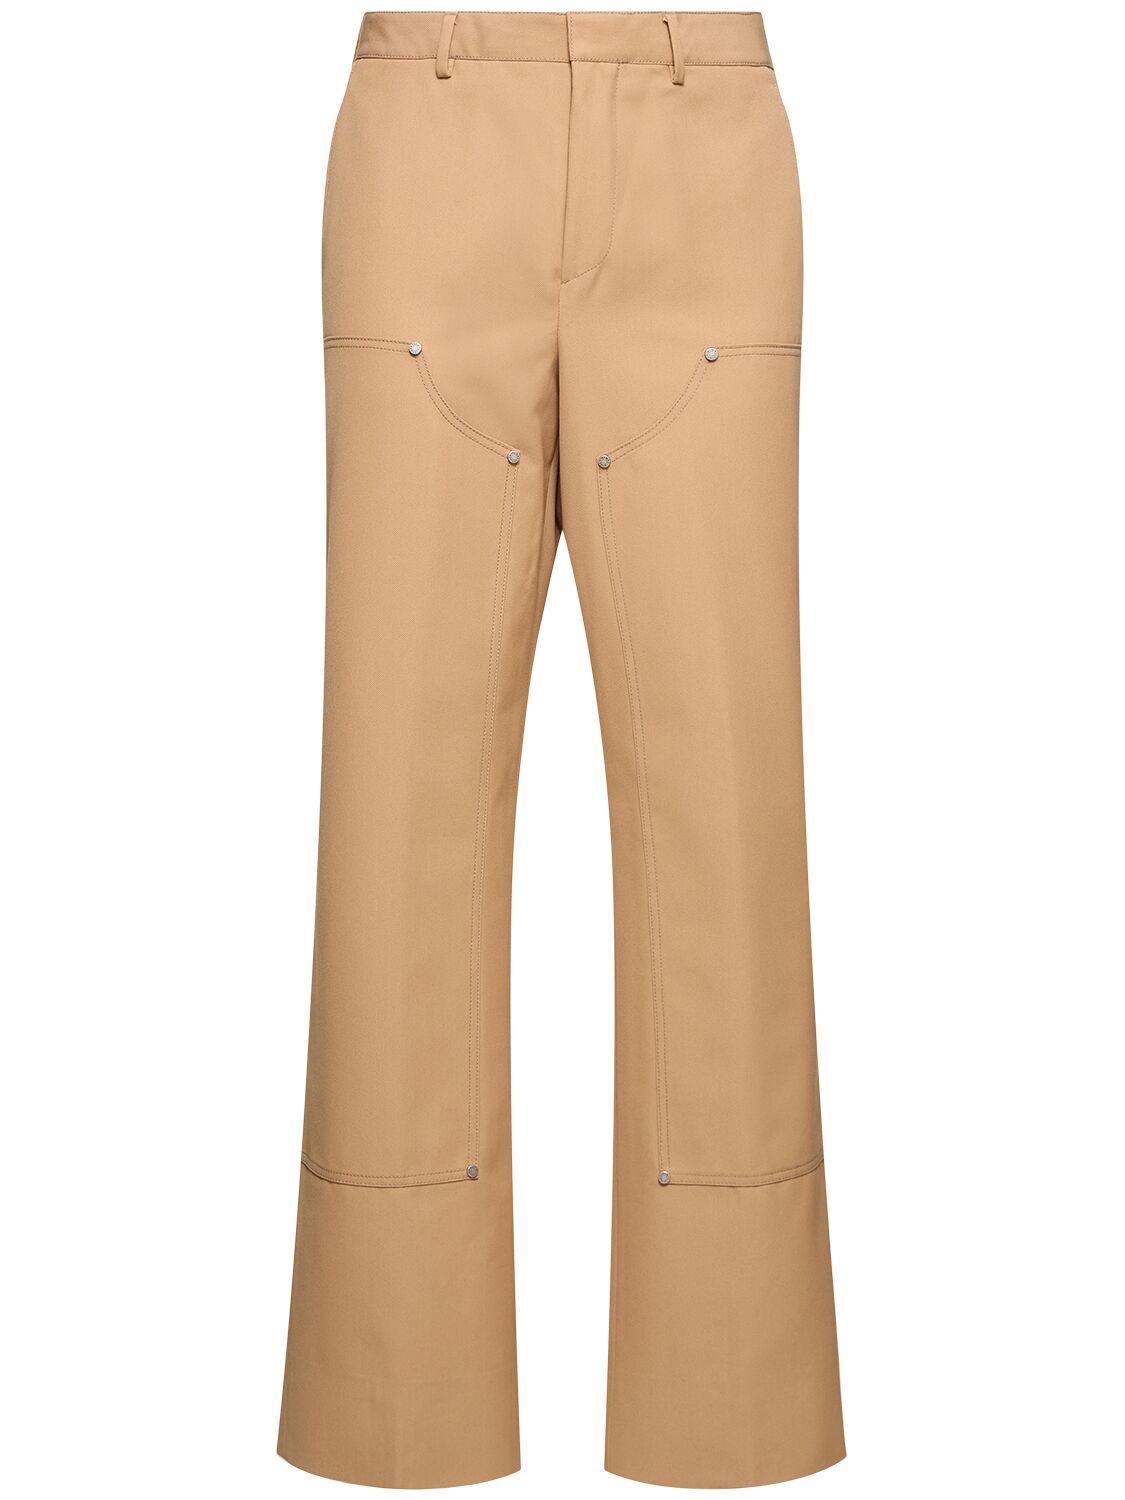 Image of Monogram Workwear Cotton Pants